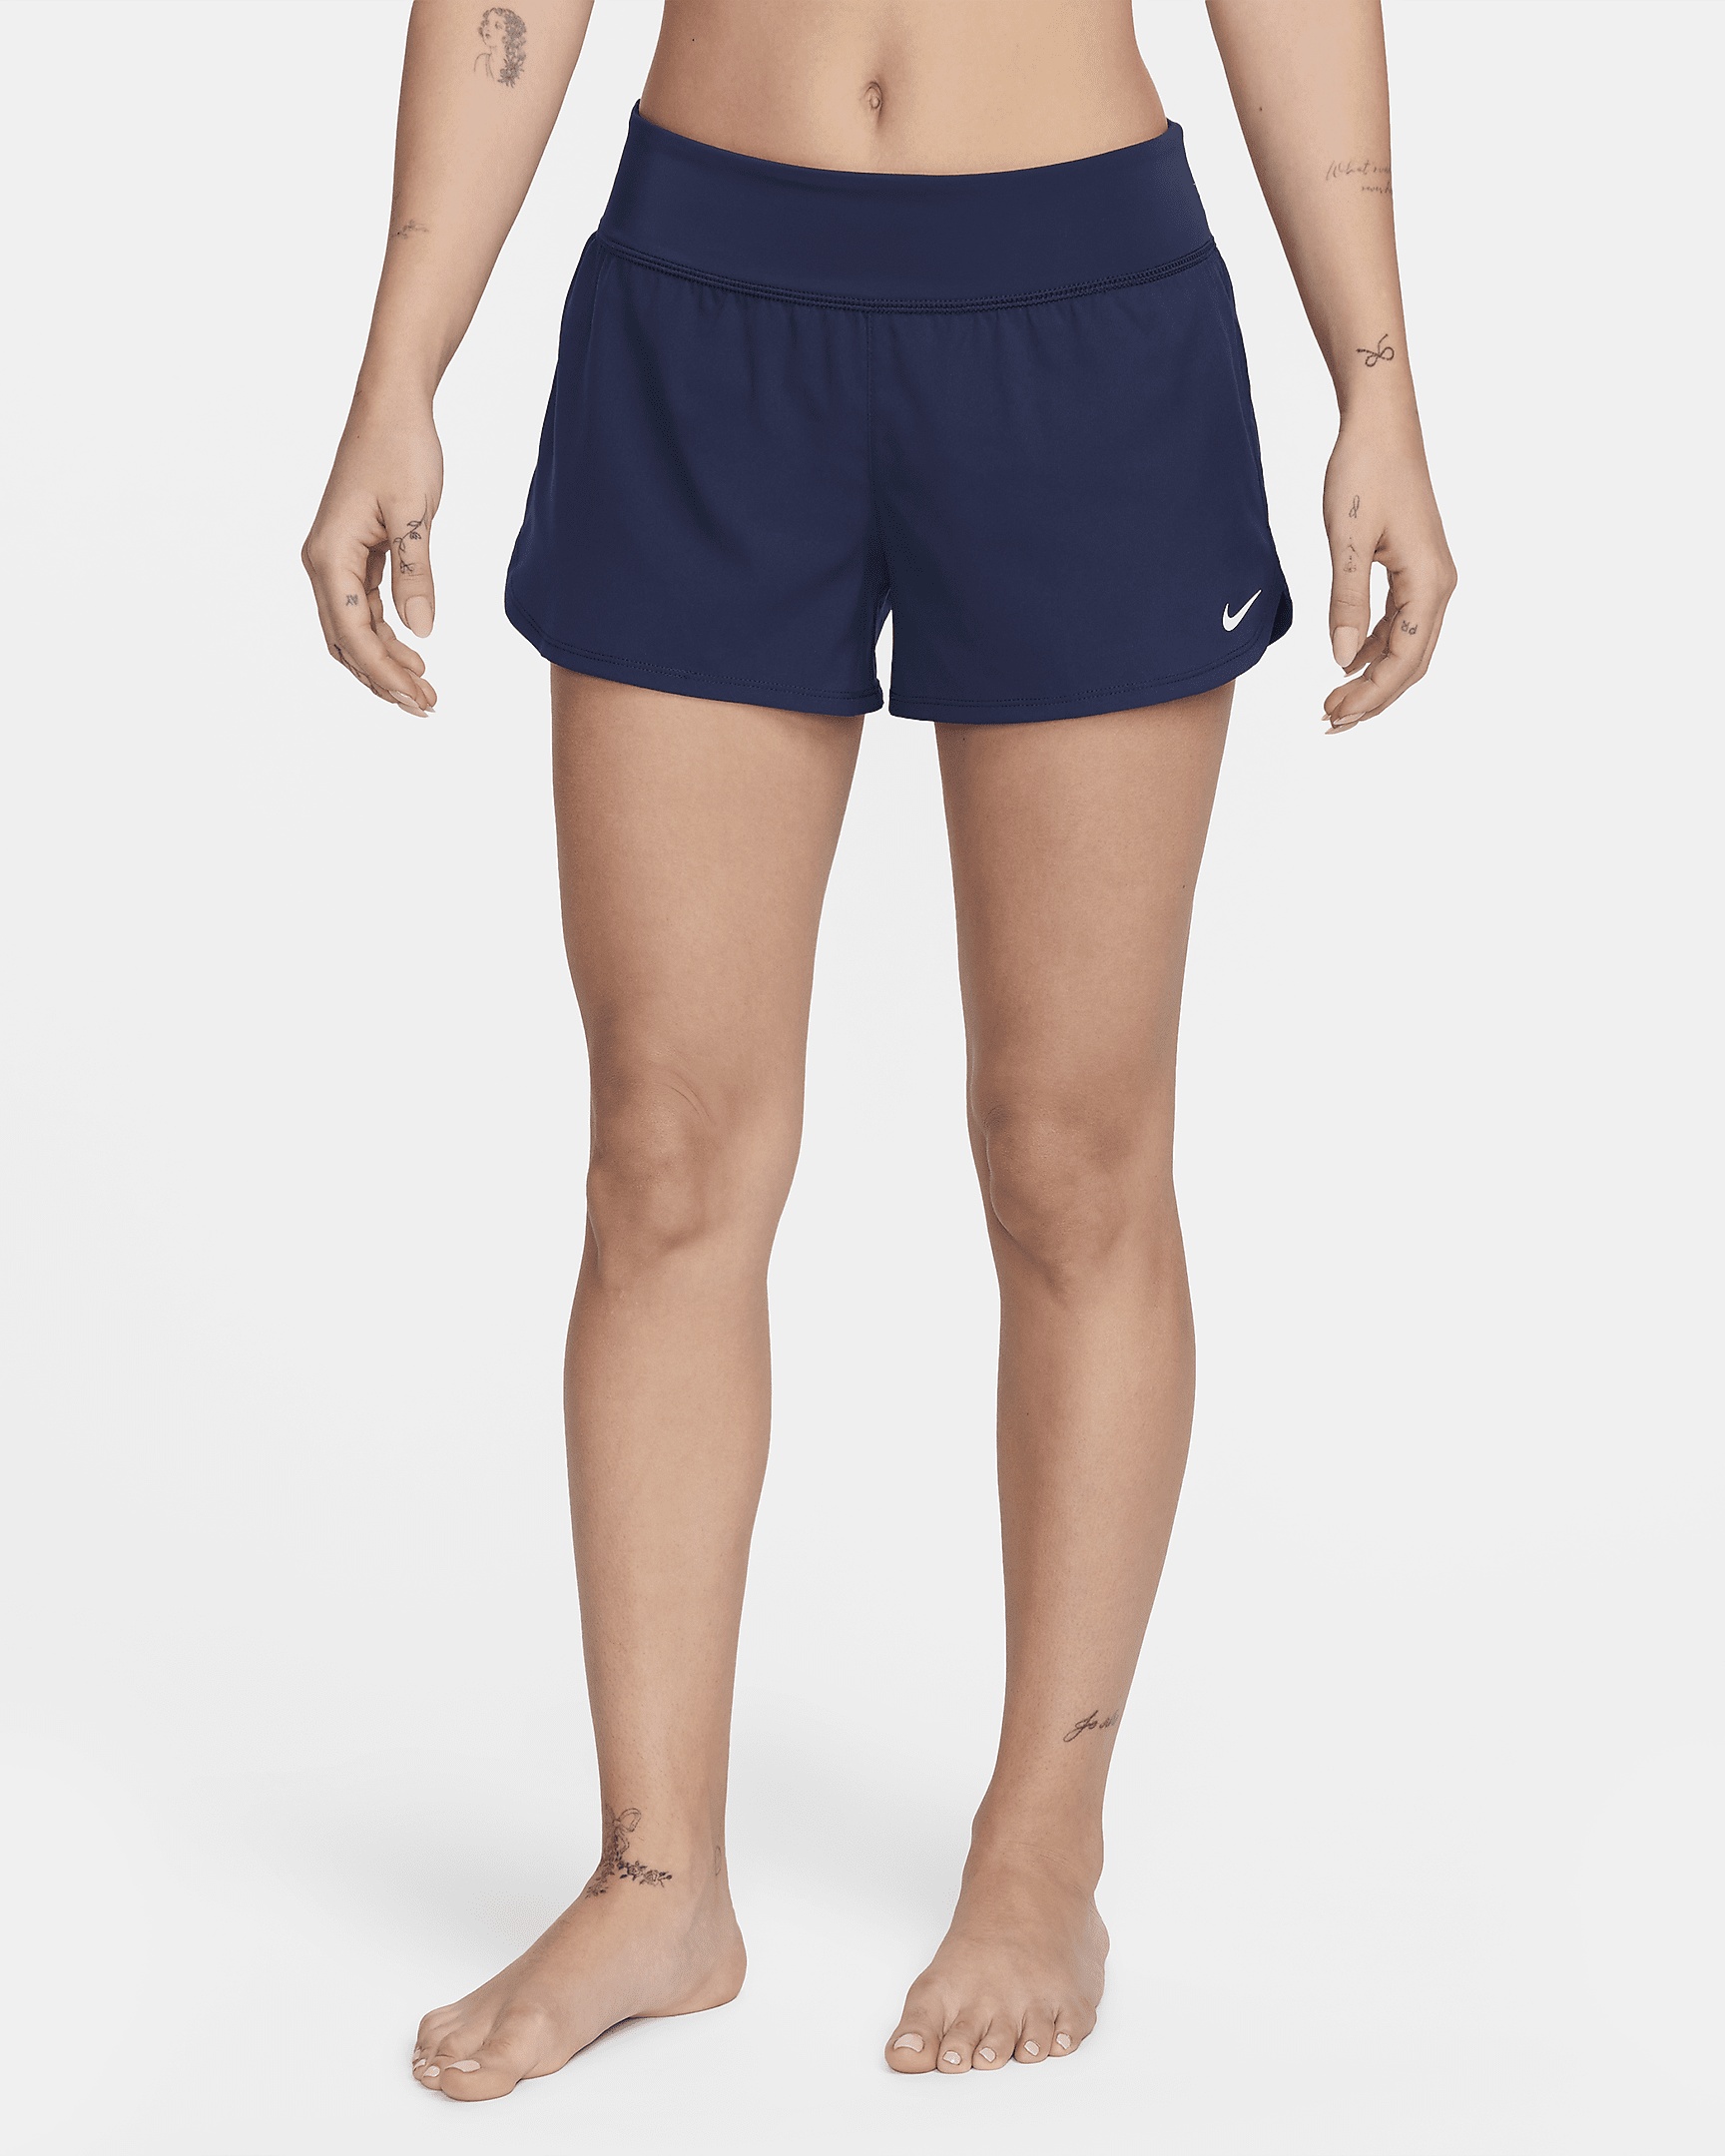 Nike Women's Essential Board Shorts - 1